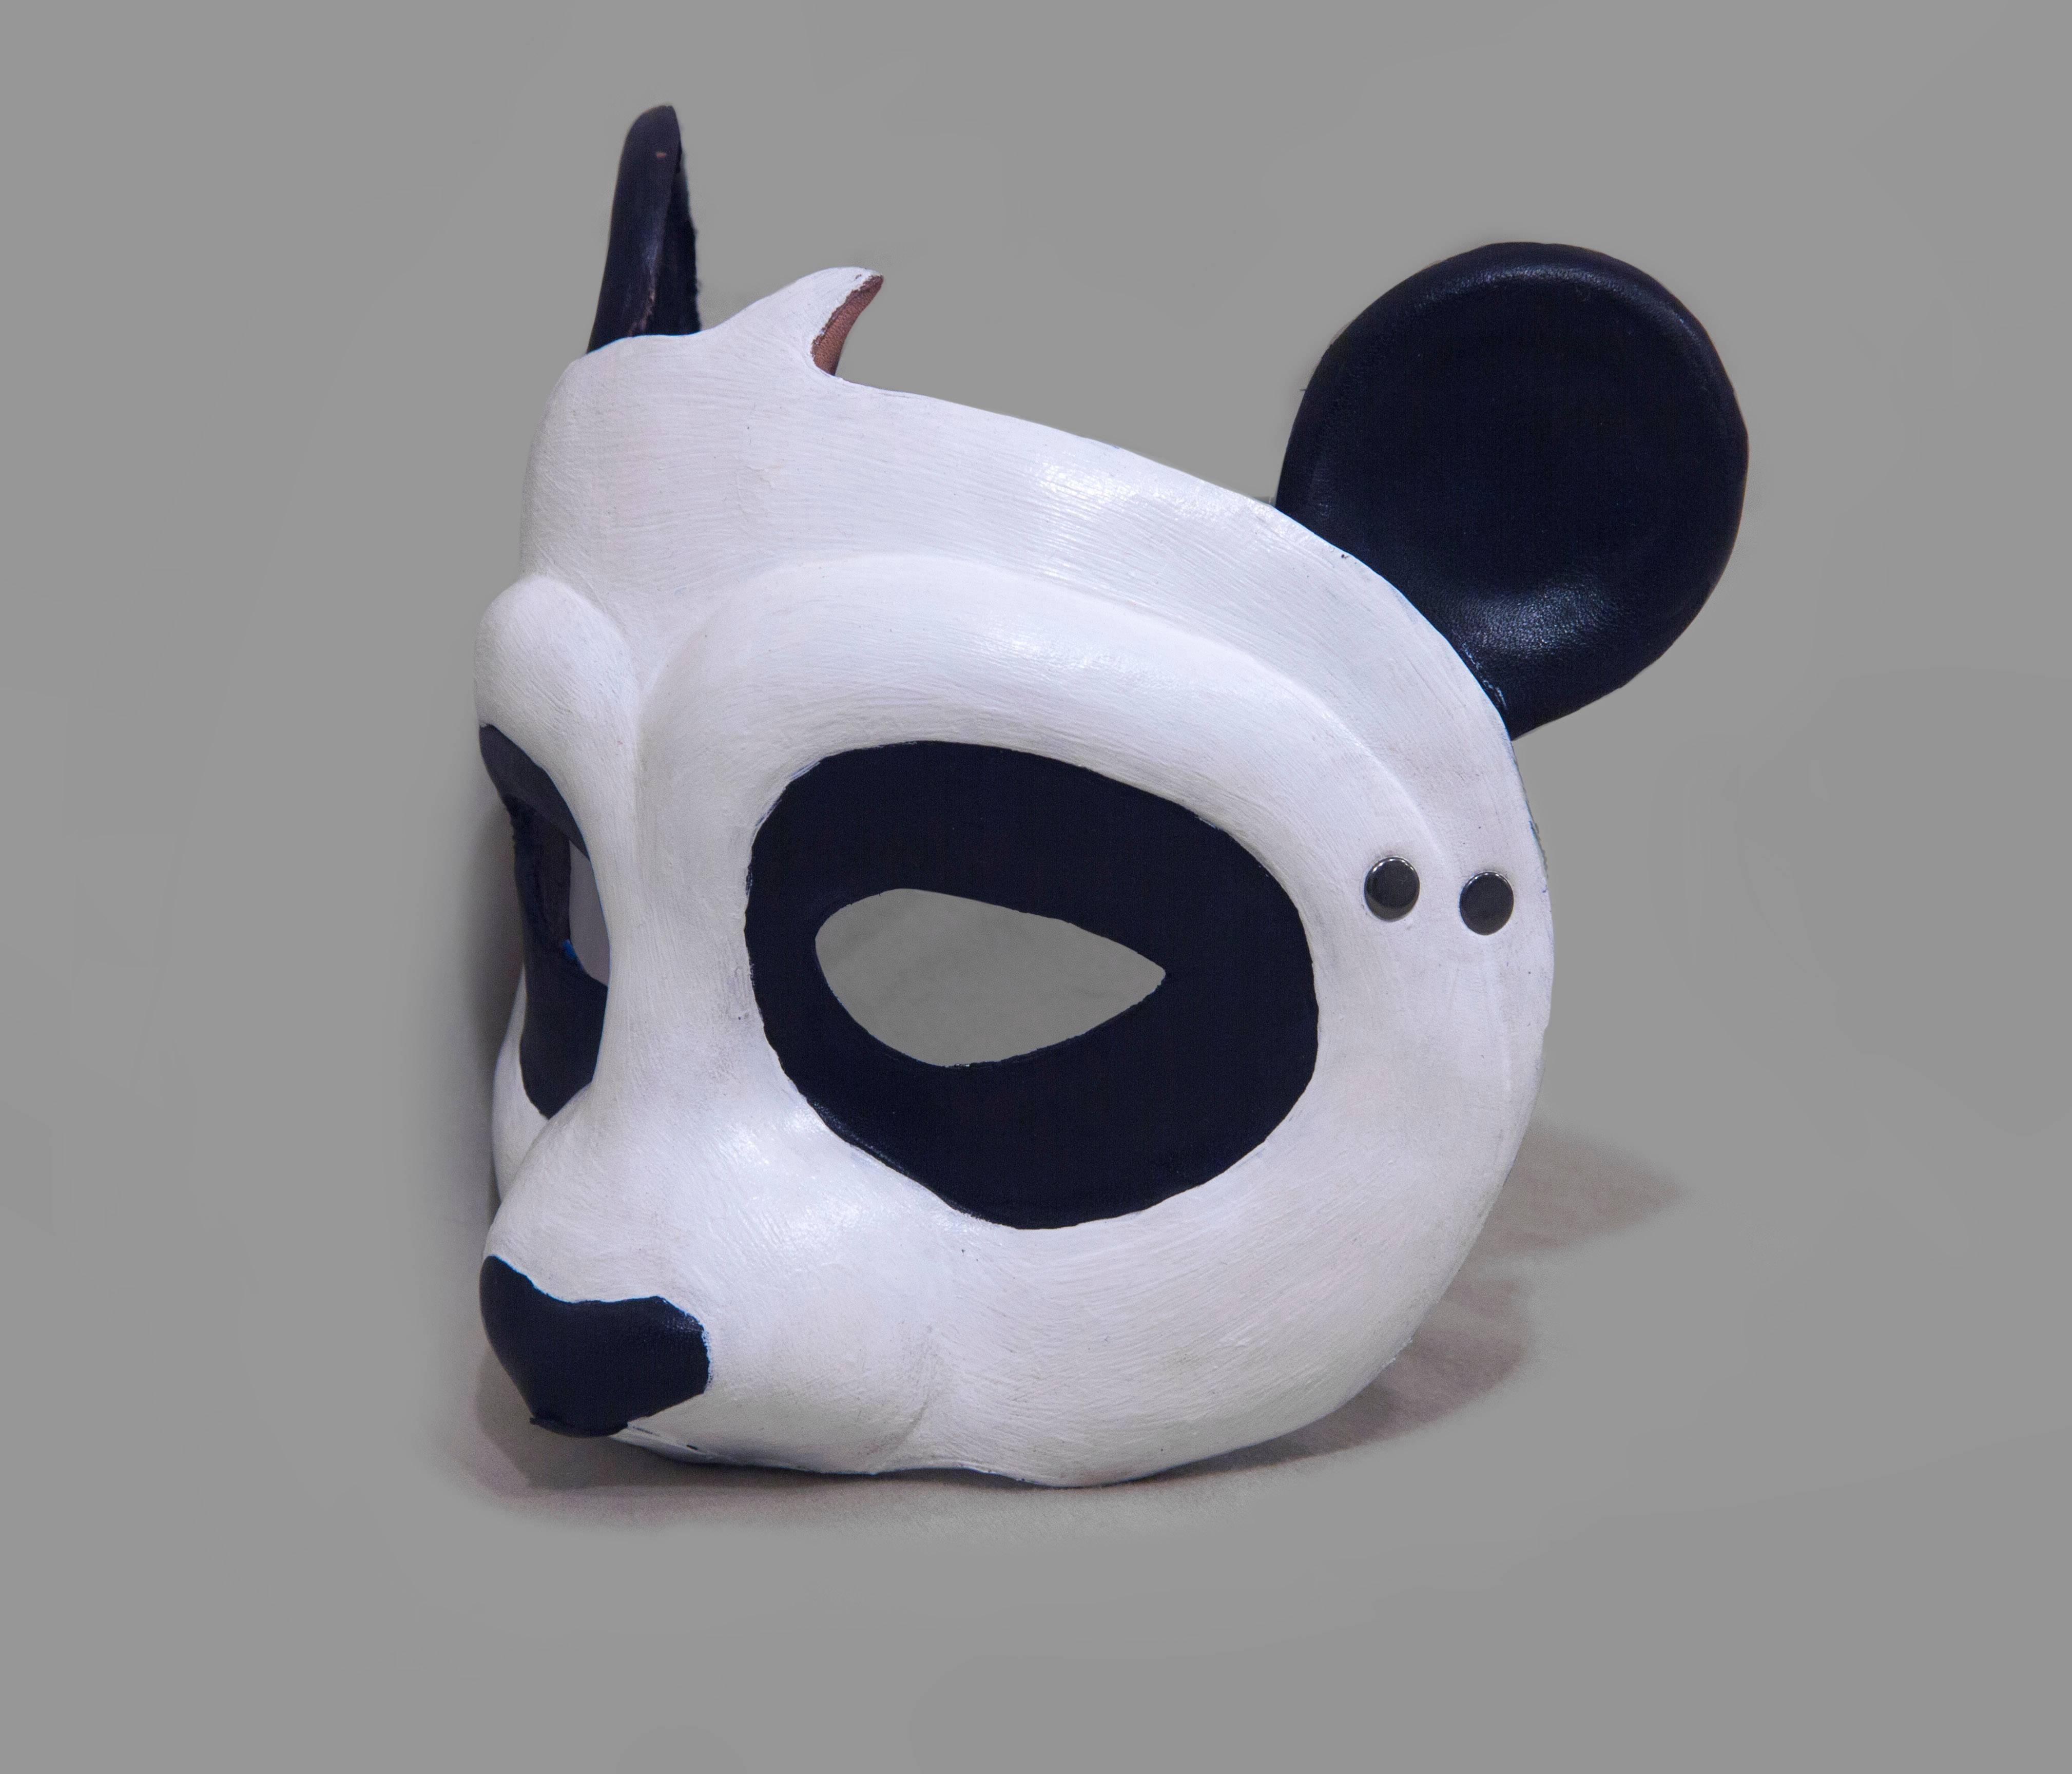 Leather Panda Mask (amerikanisch)